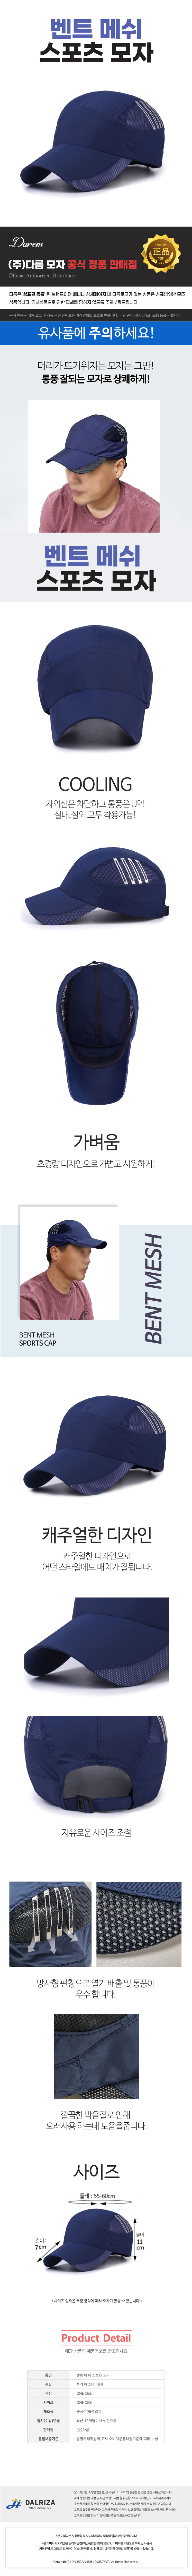 bent_mesh_sports_hat_detail.jpg